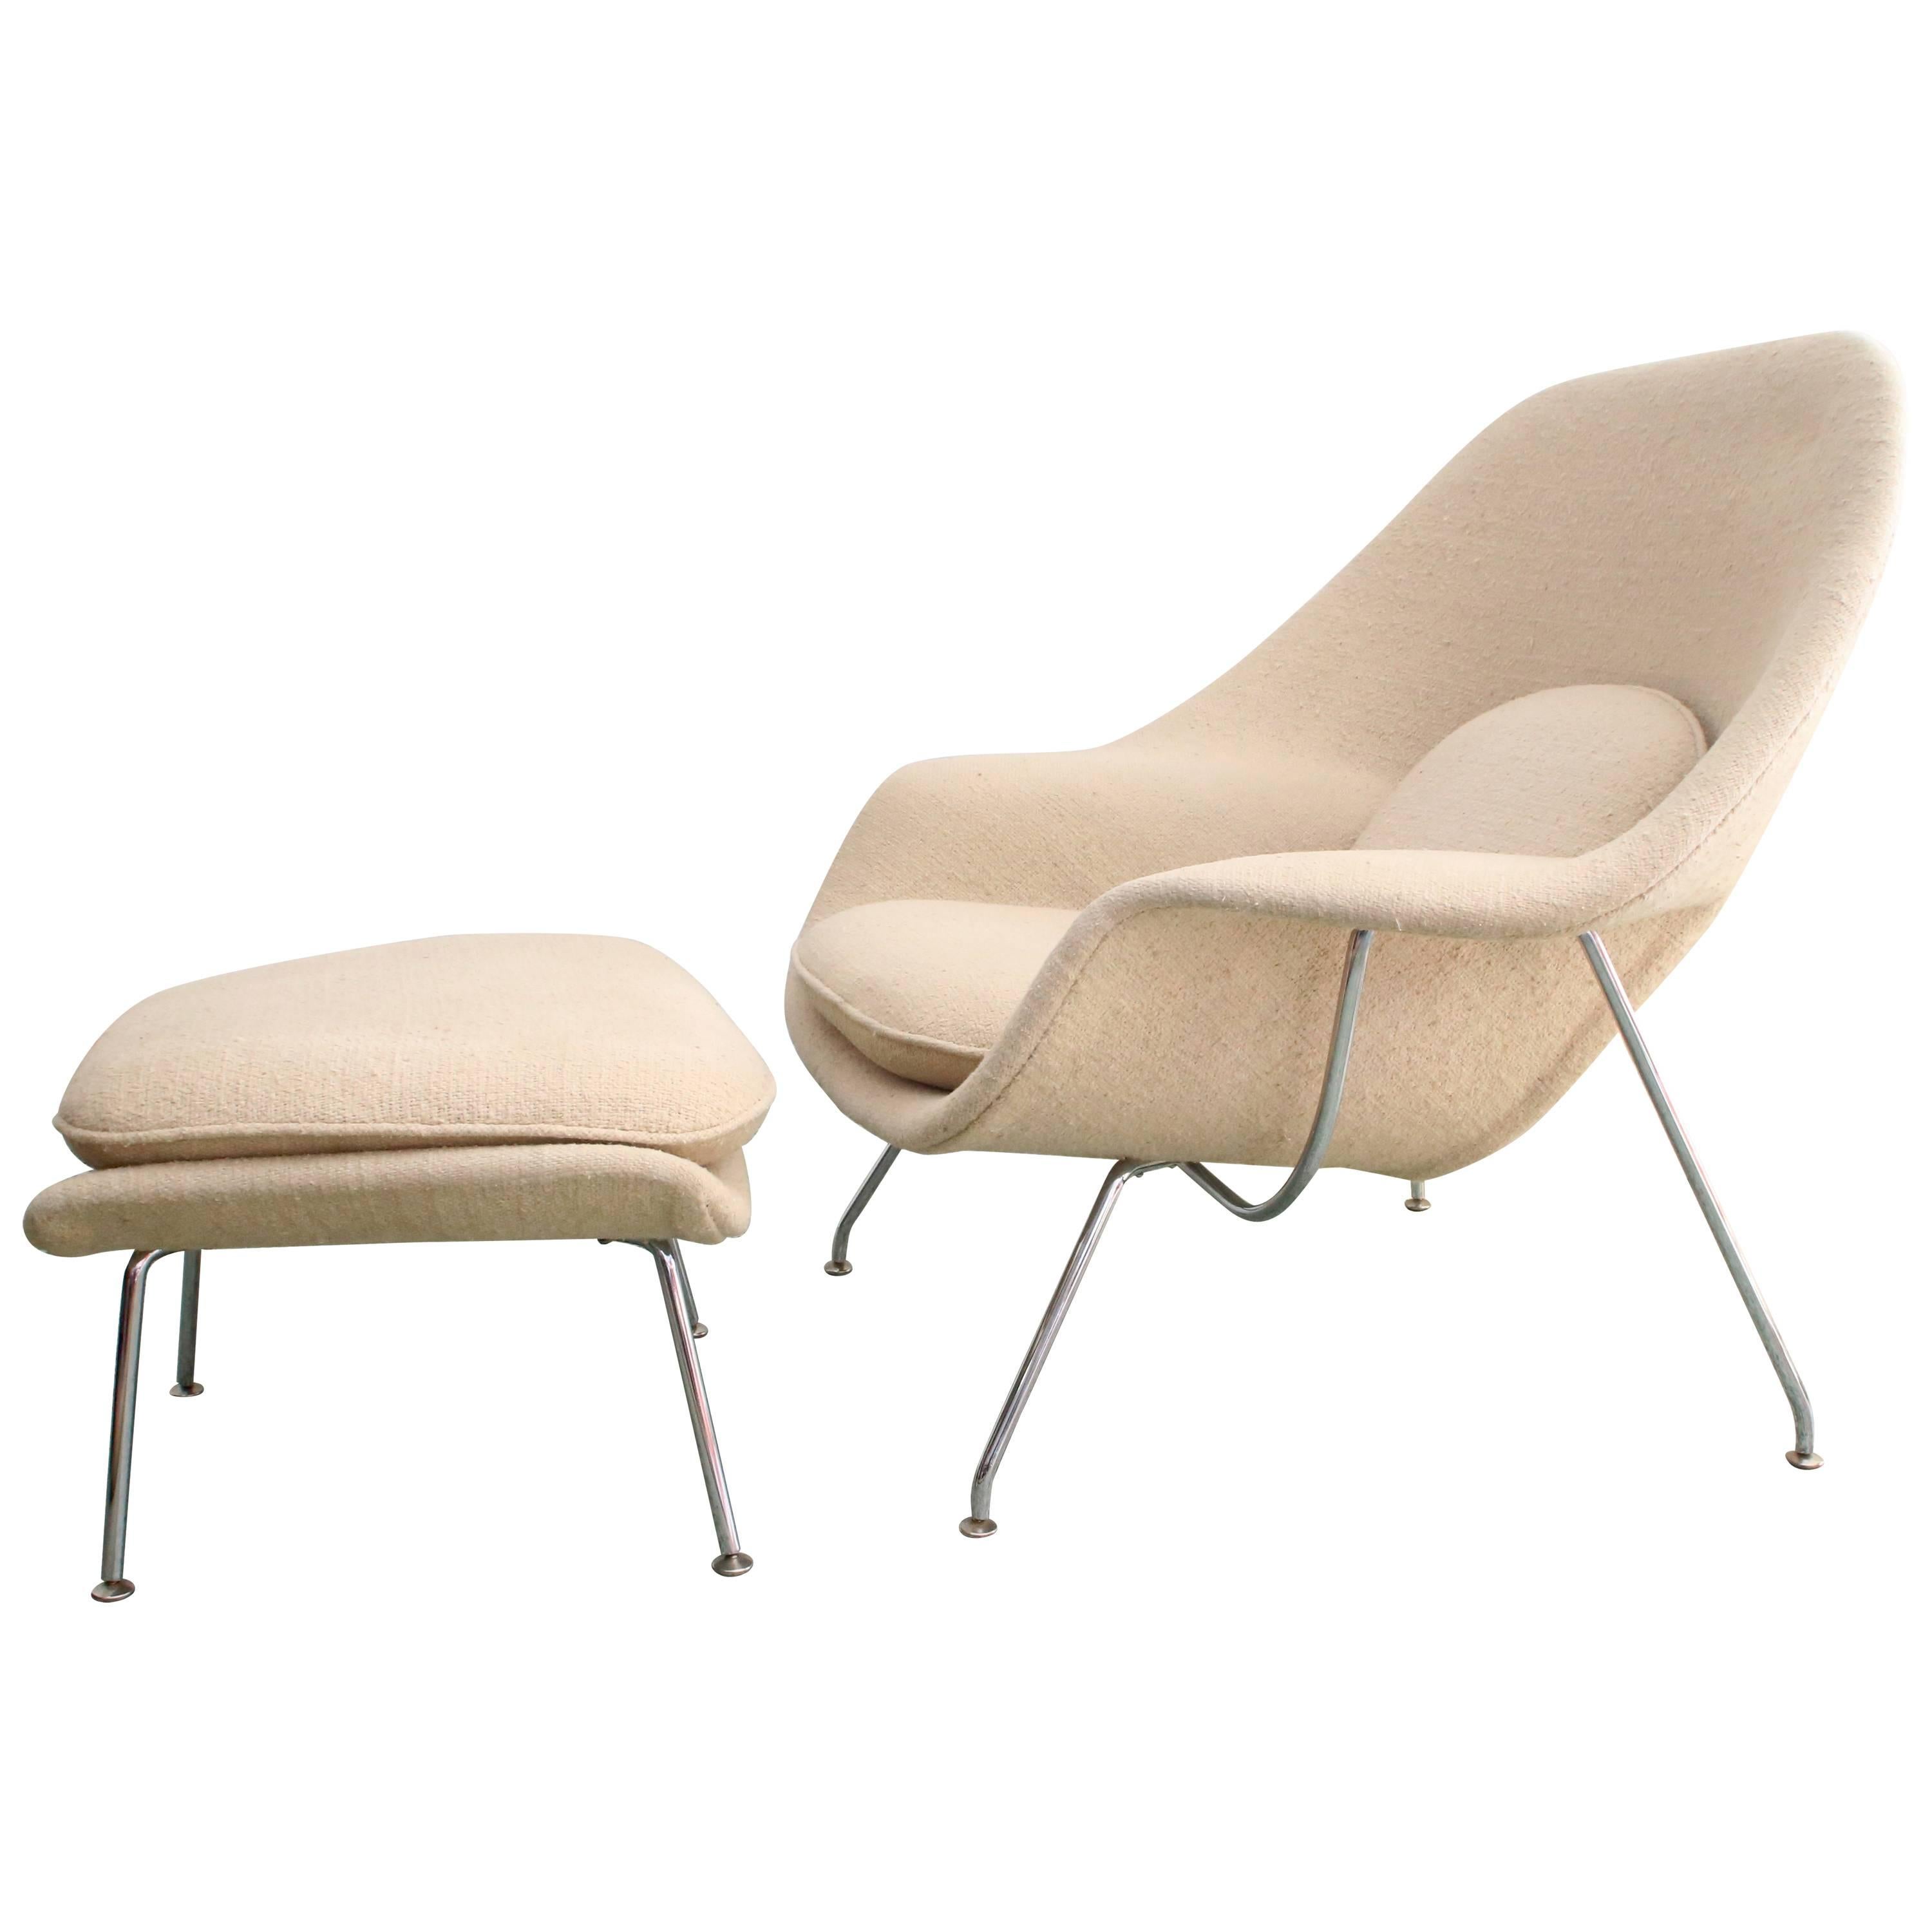 1979 Womb Chair & Ottoman by Eero Saarinen for Knoll Original Fabric